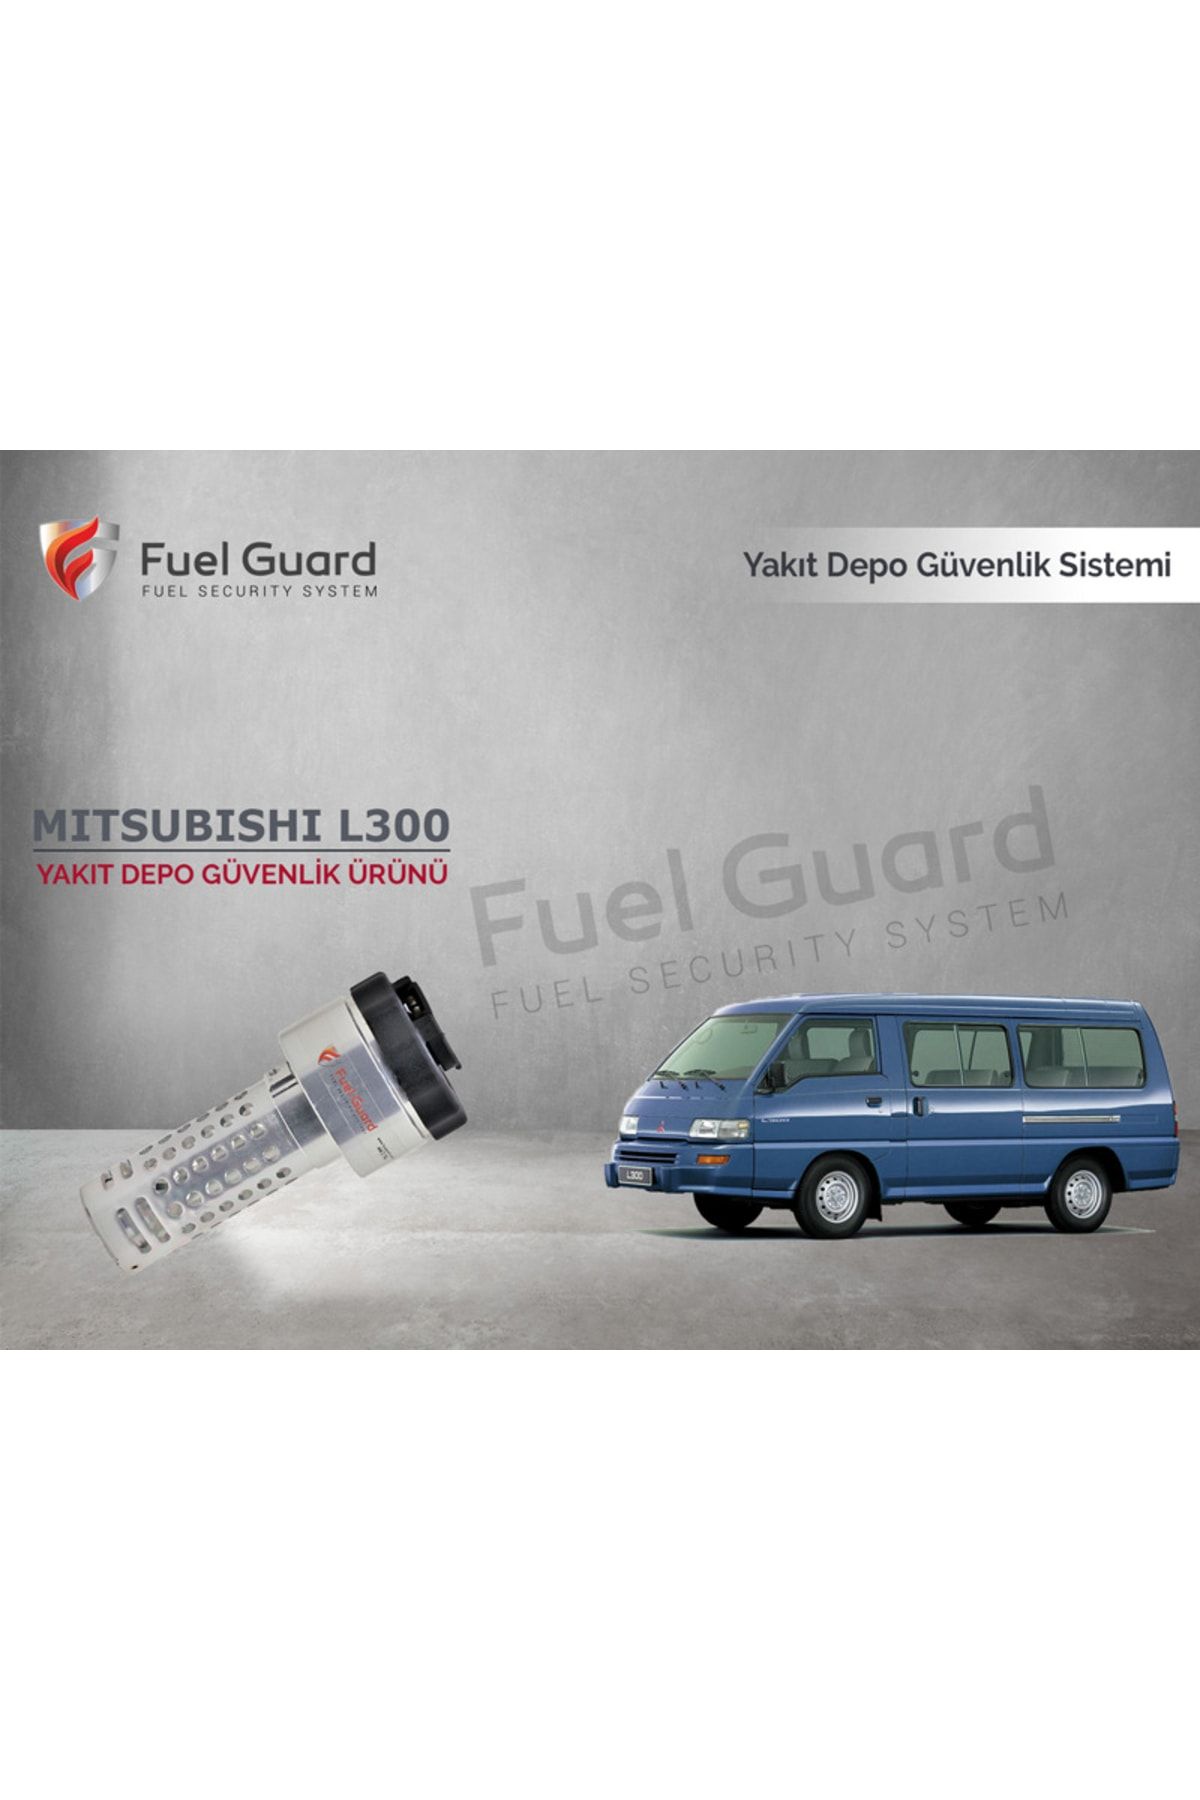 FUEL GUARD Mitsubishi L30 Minibüs-midibüs Yakıt Depo Koruma Cihazı